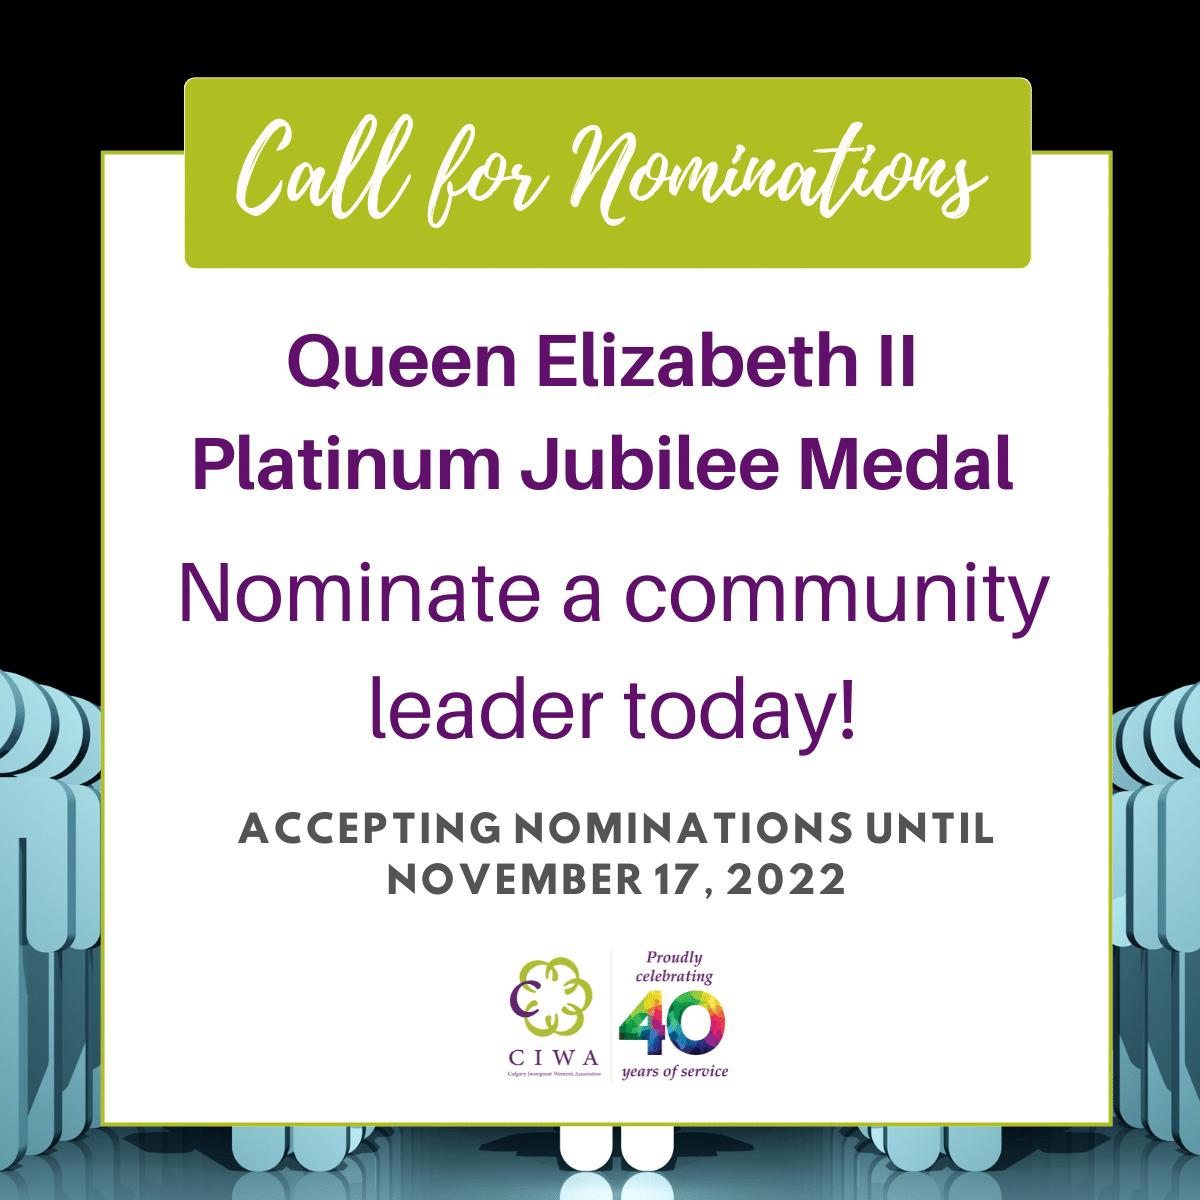 Nominate a Community Leader: Queen Elizabeth II’s Platinum Jubilee Medal